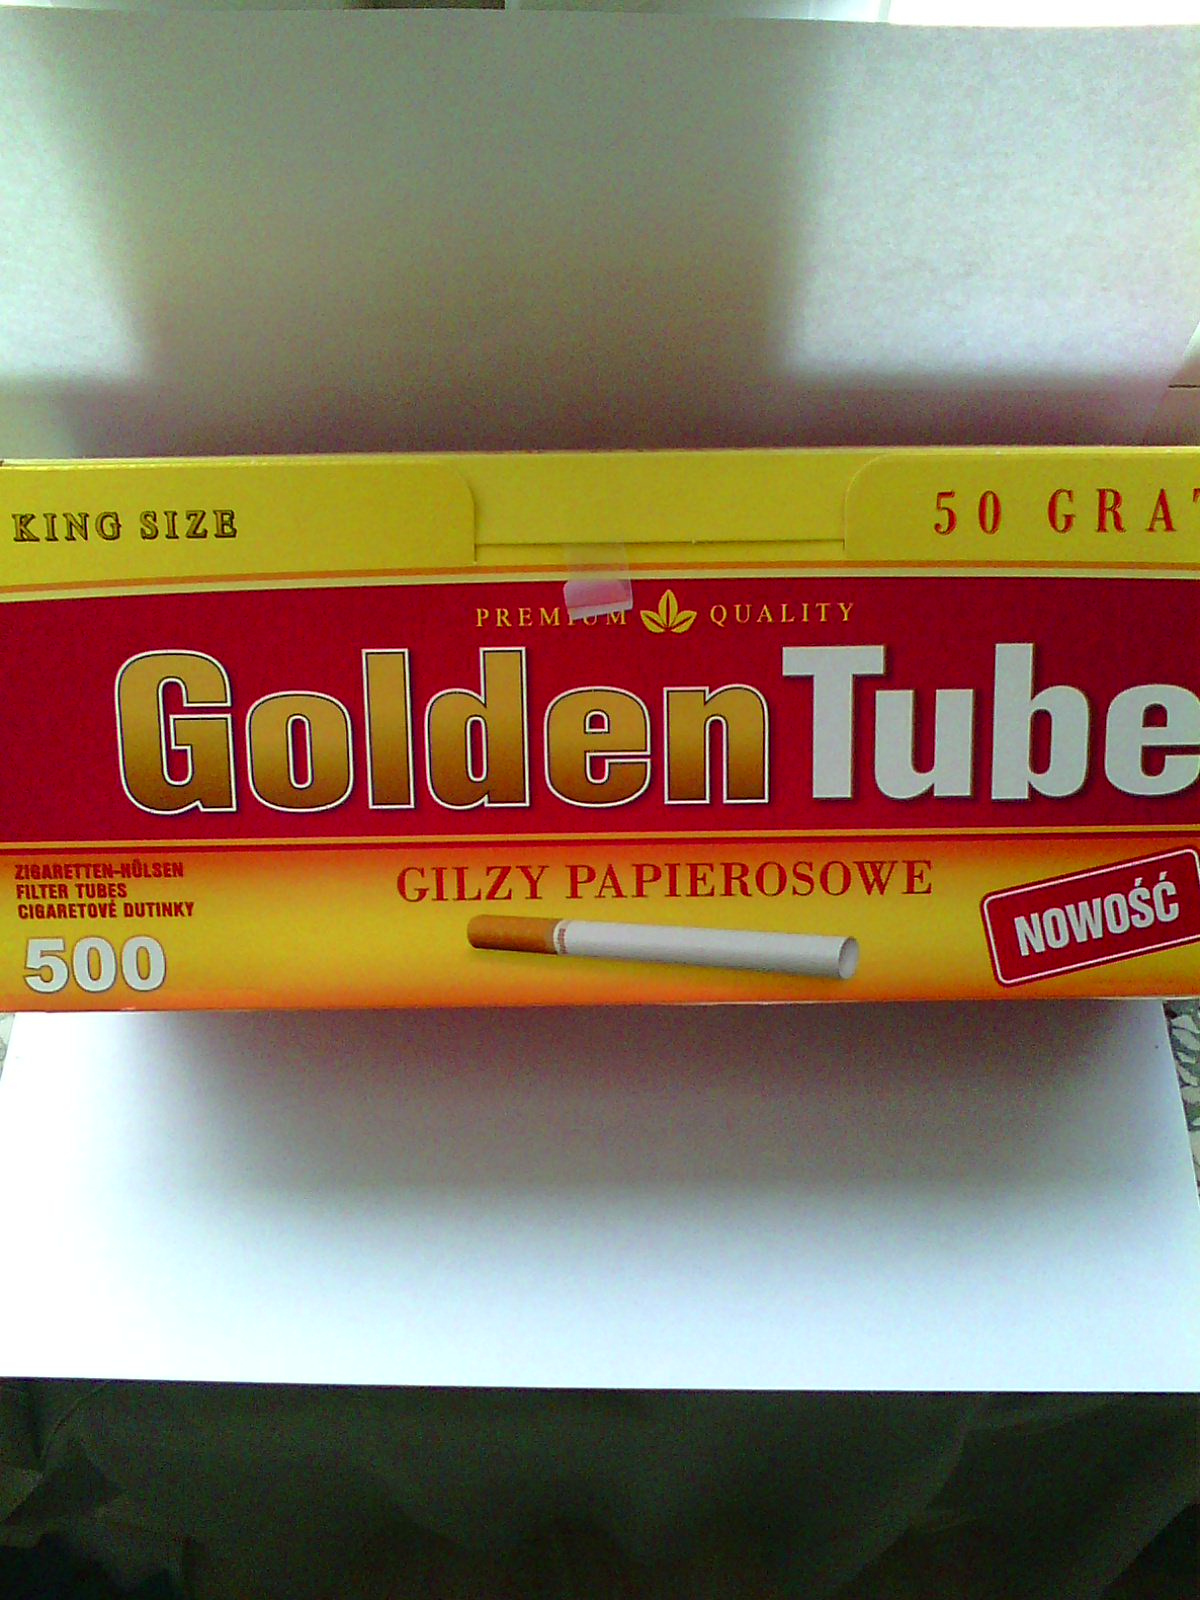 Gilzy papierosowe GOLDEN TUBE 500